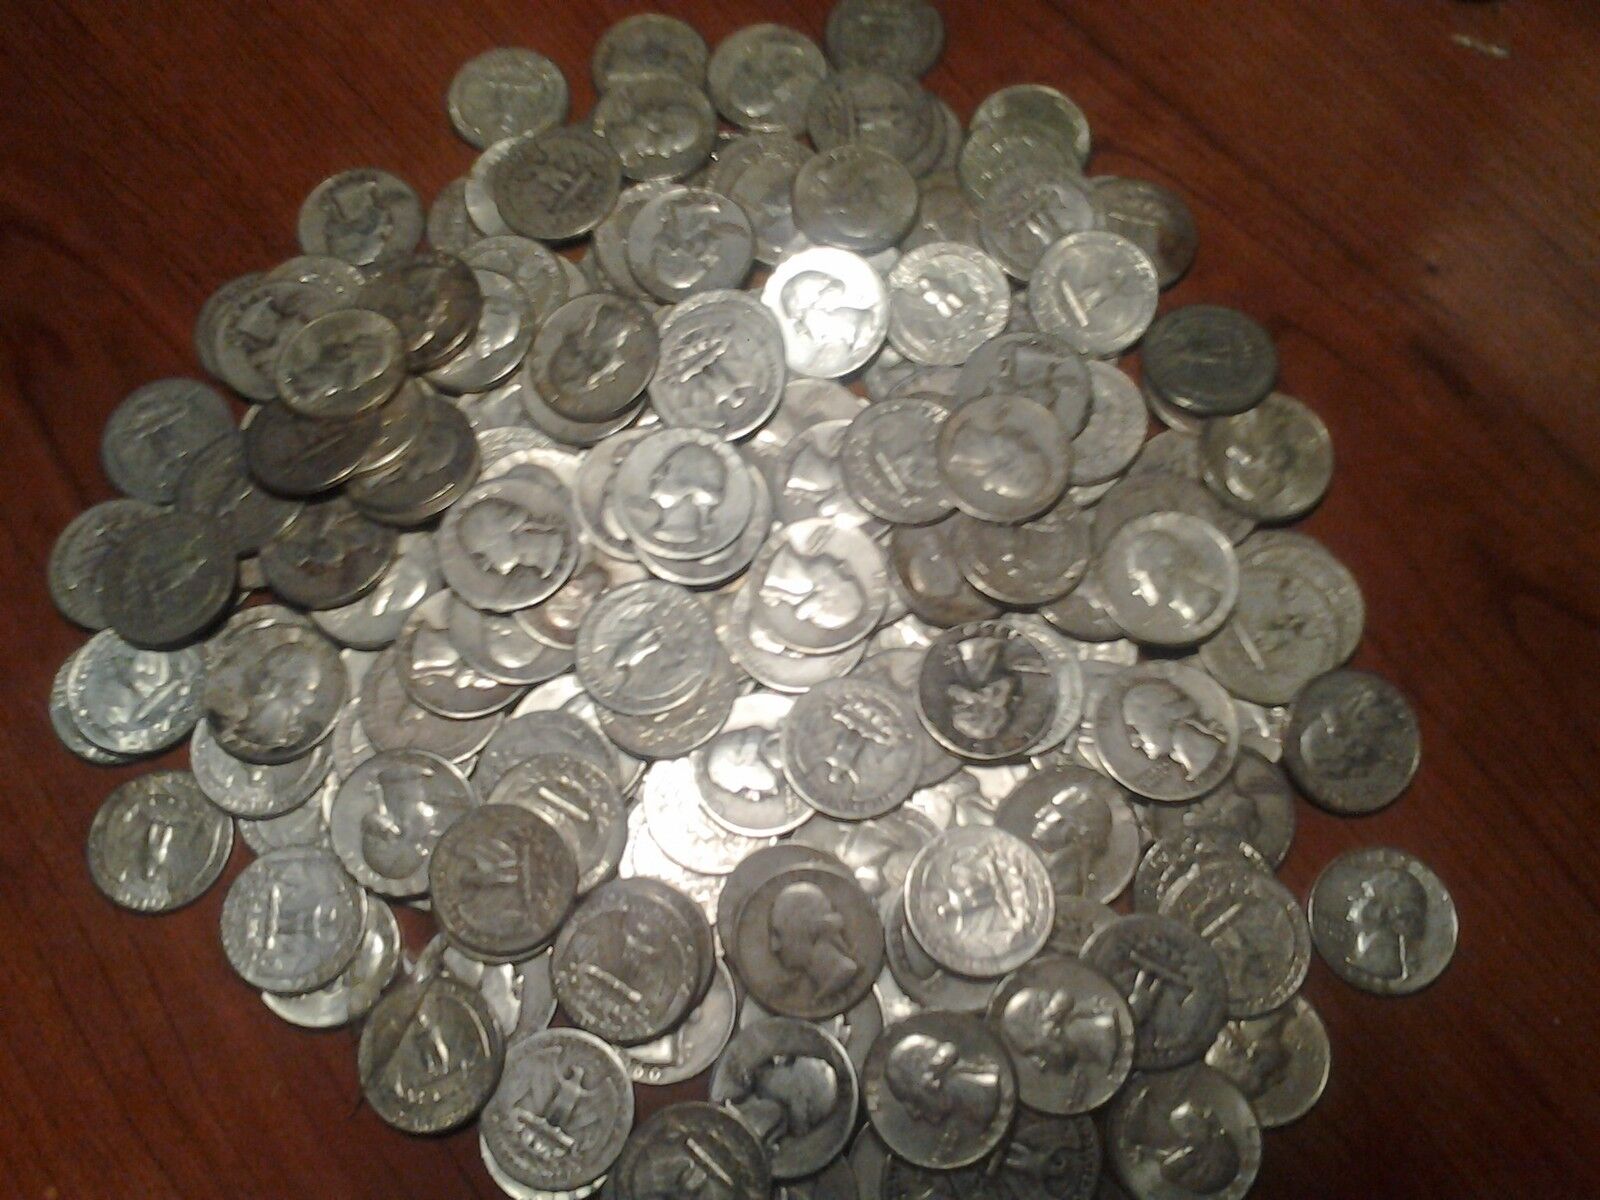 90% Lot US Junk Silver Coin 1 Pound LB 16 OZ. Pre-1965 Washington Quarters